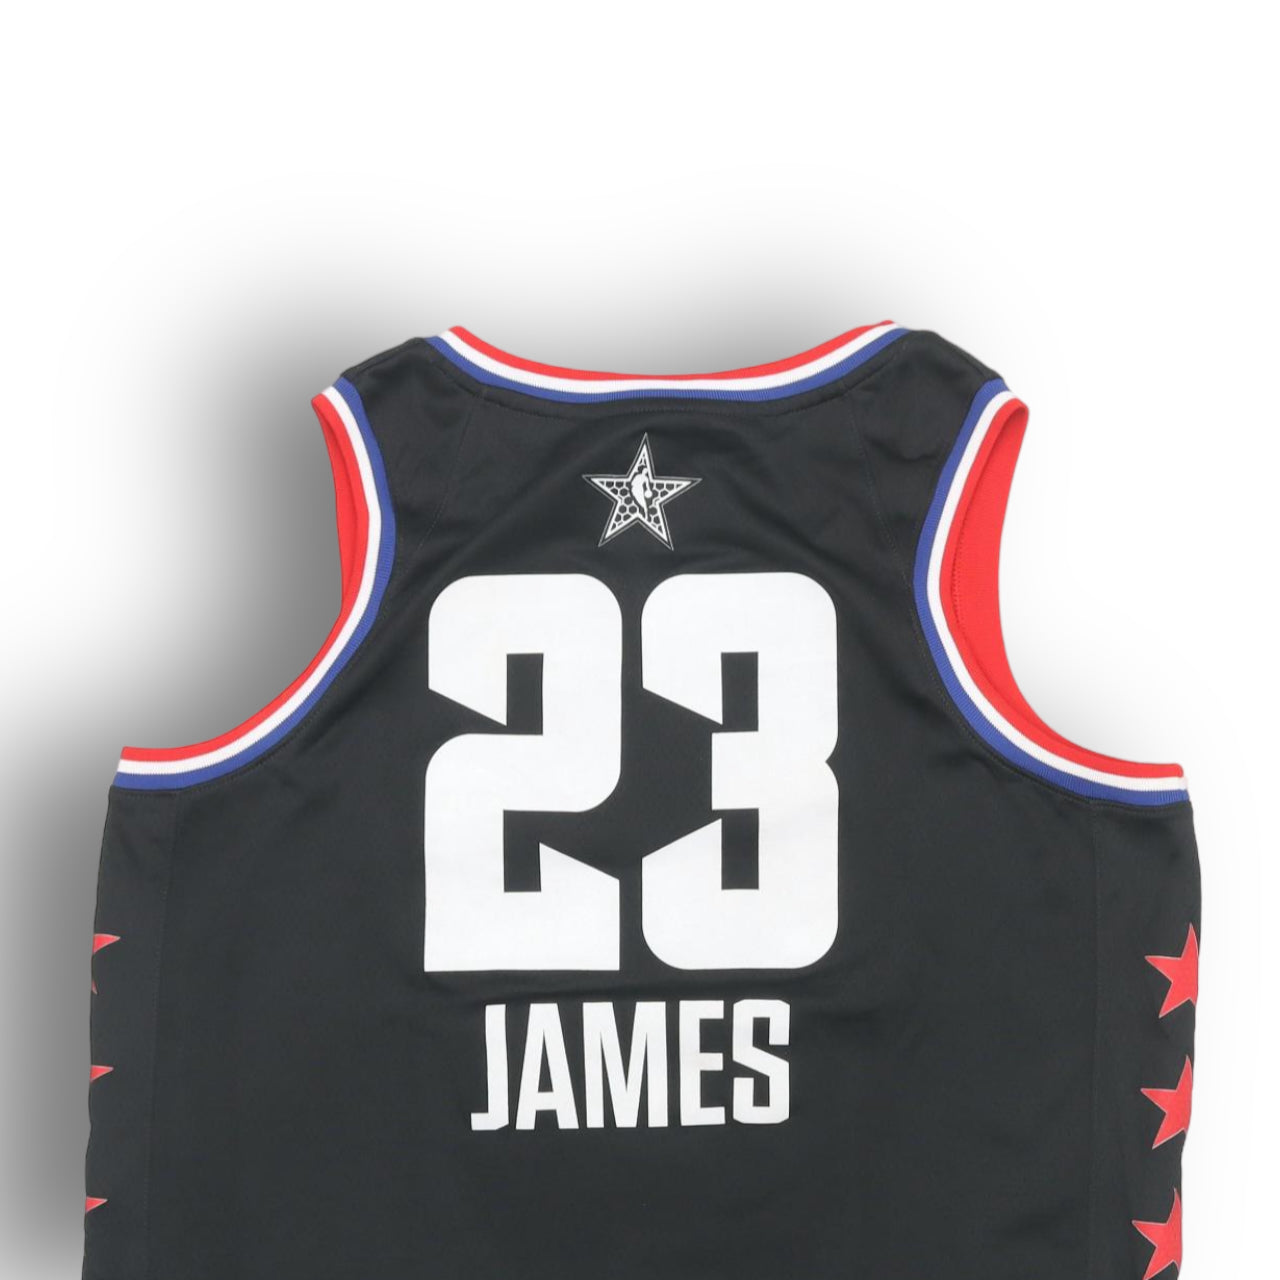 LeBron James Los Angles Lakers 2019 NBA All-Star Game Nike Swingman Jersey - Black